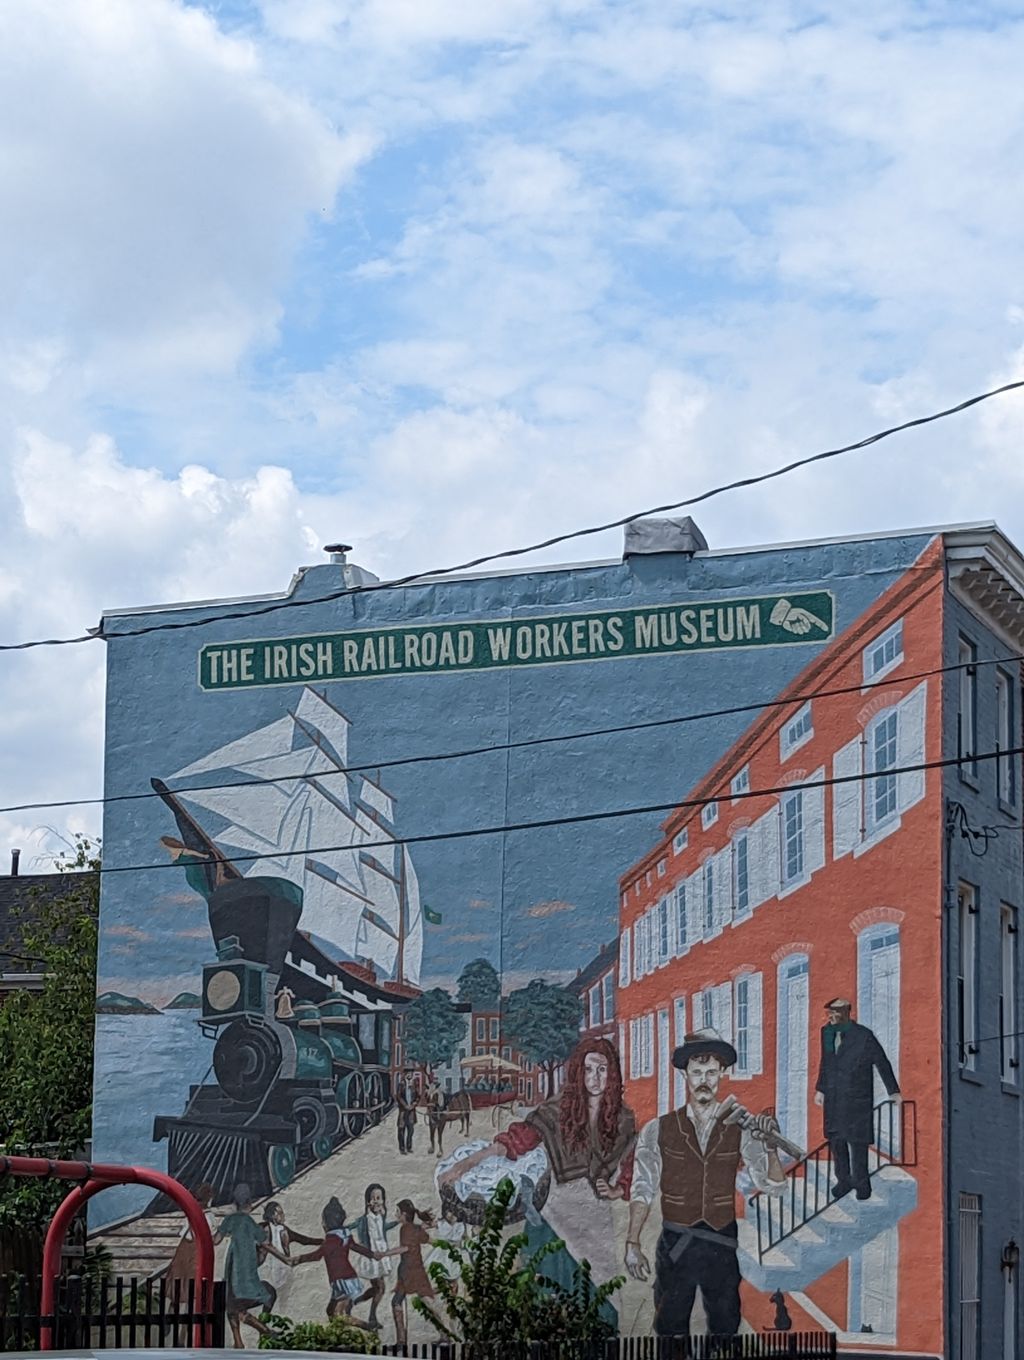 The Irish Railroad Workers Museum